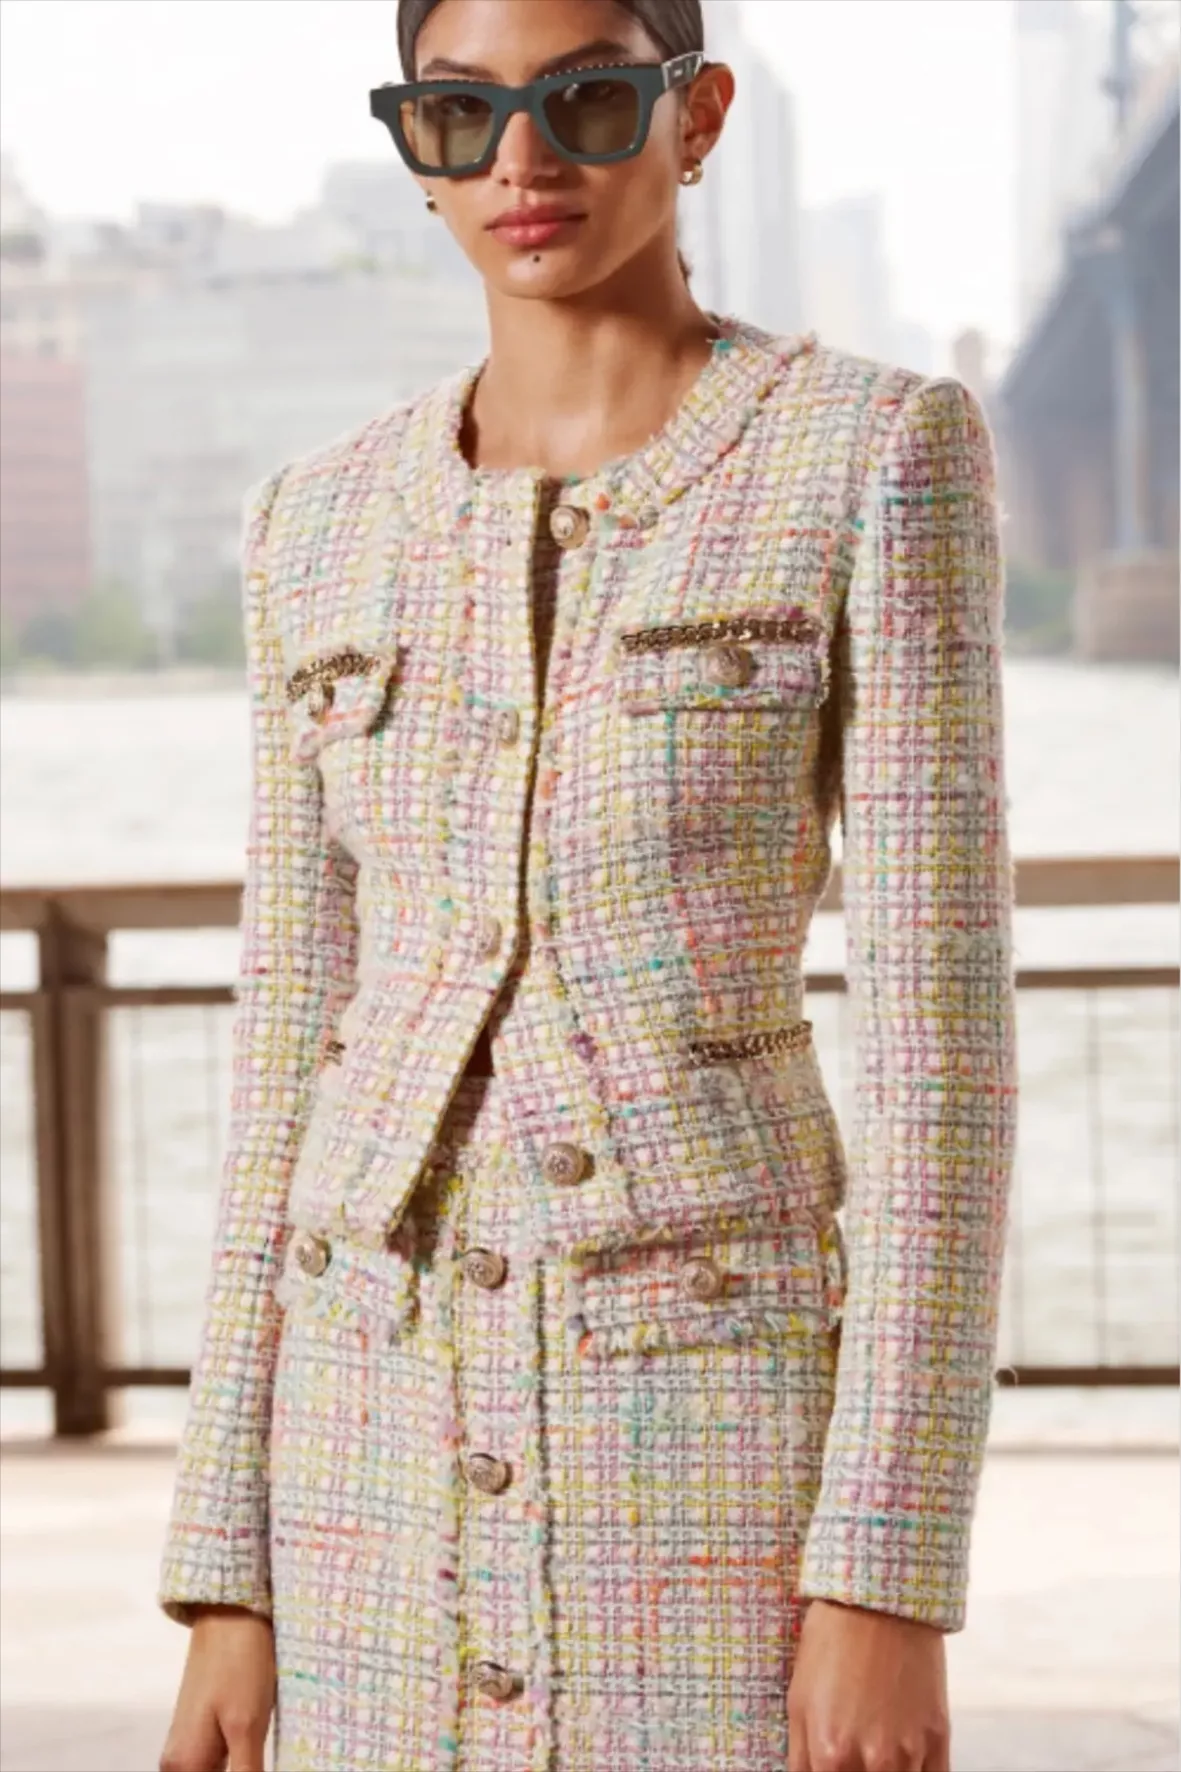 Chanel-inspired Tweed Jacket Patterns